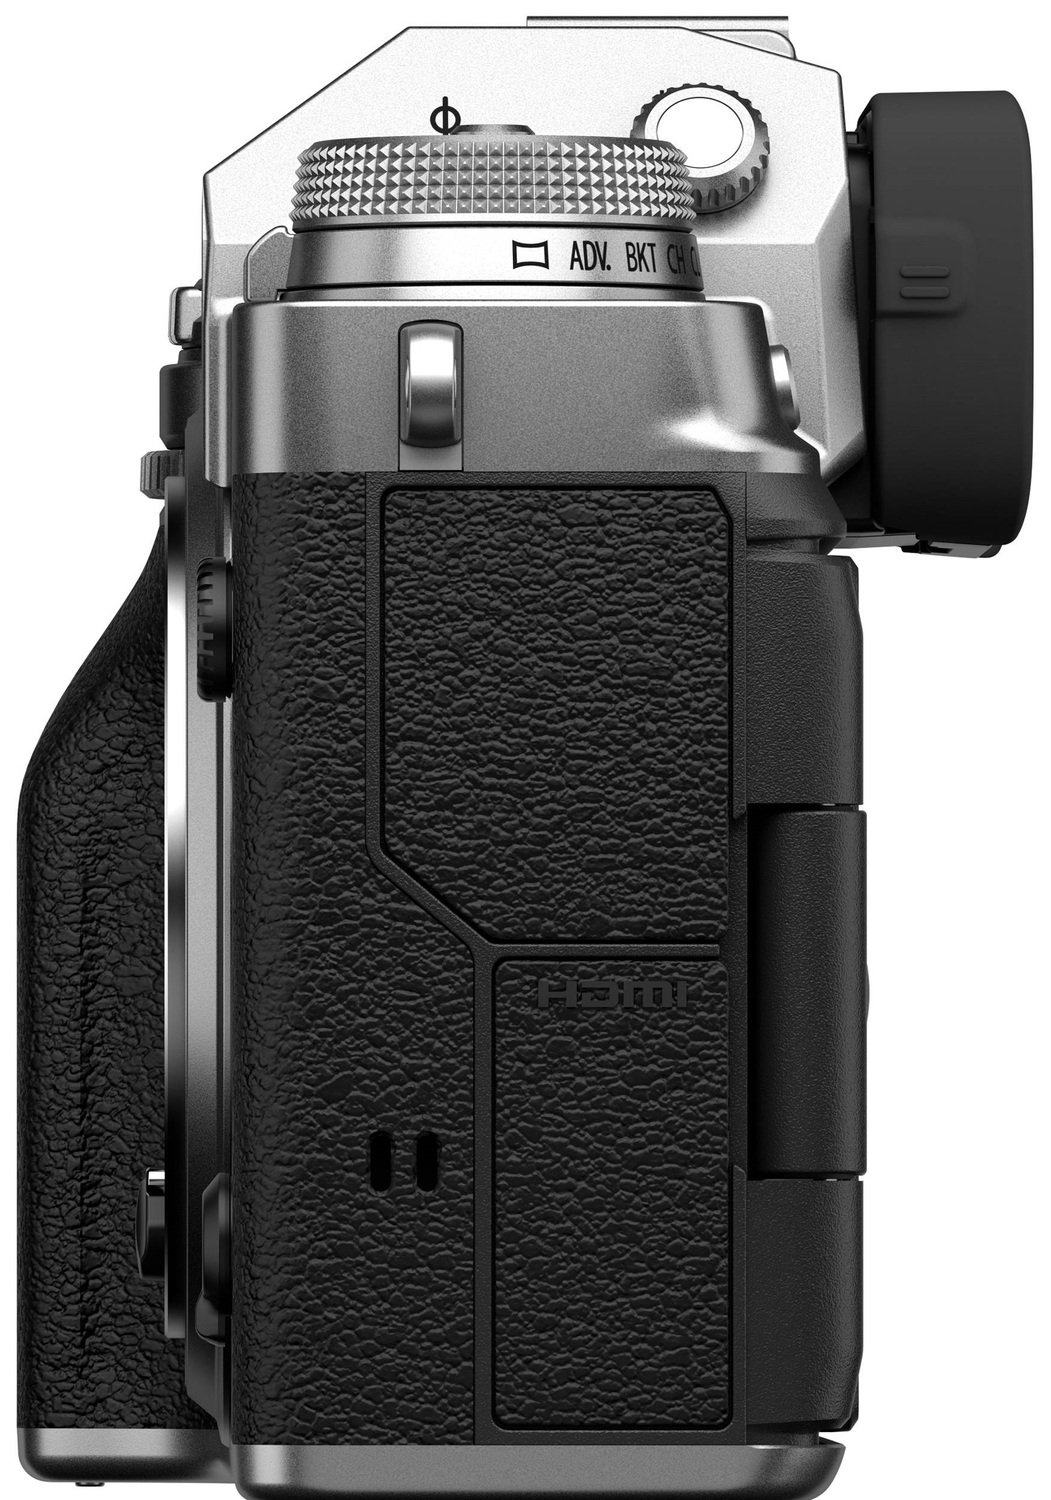 Фотоаппарат FujiFilm X-T4 Body Silver